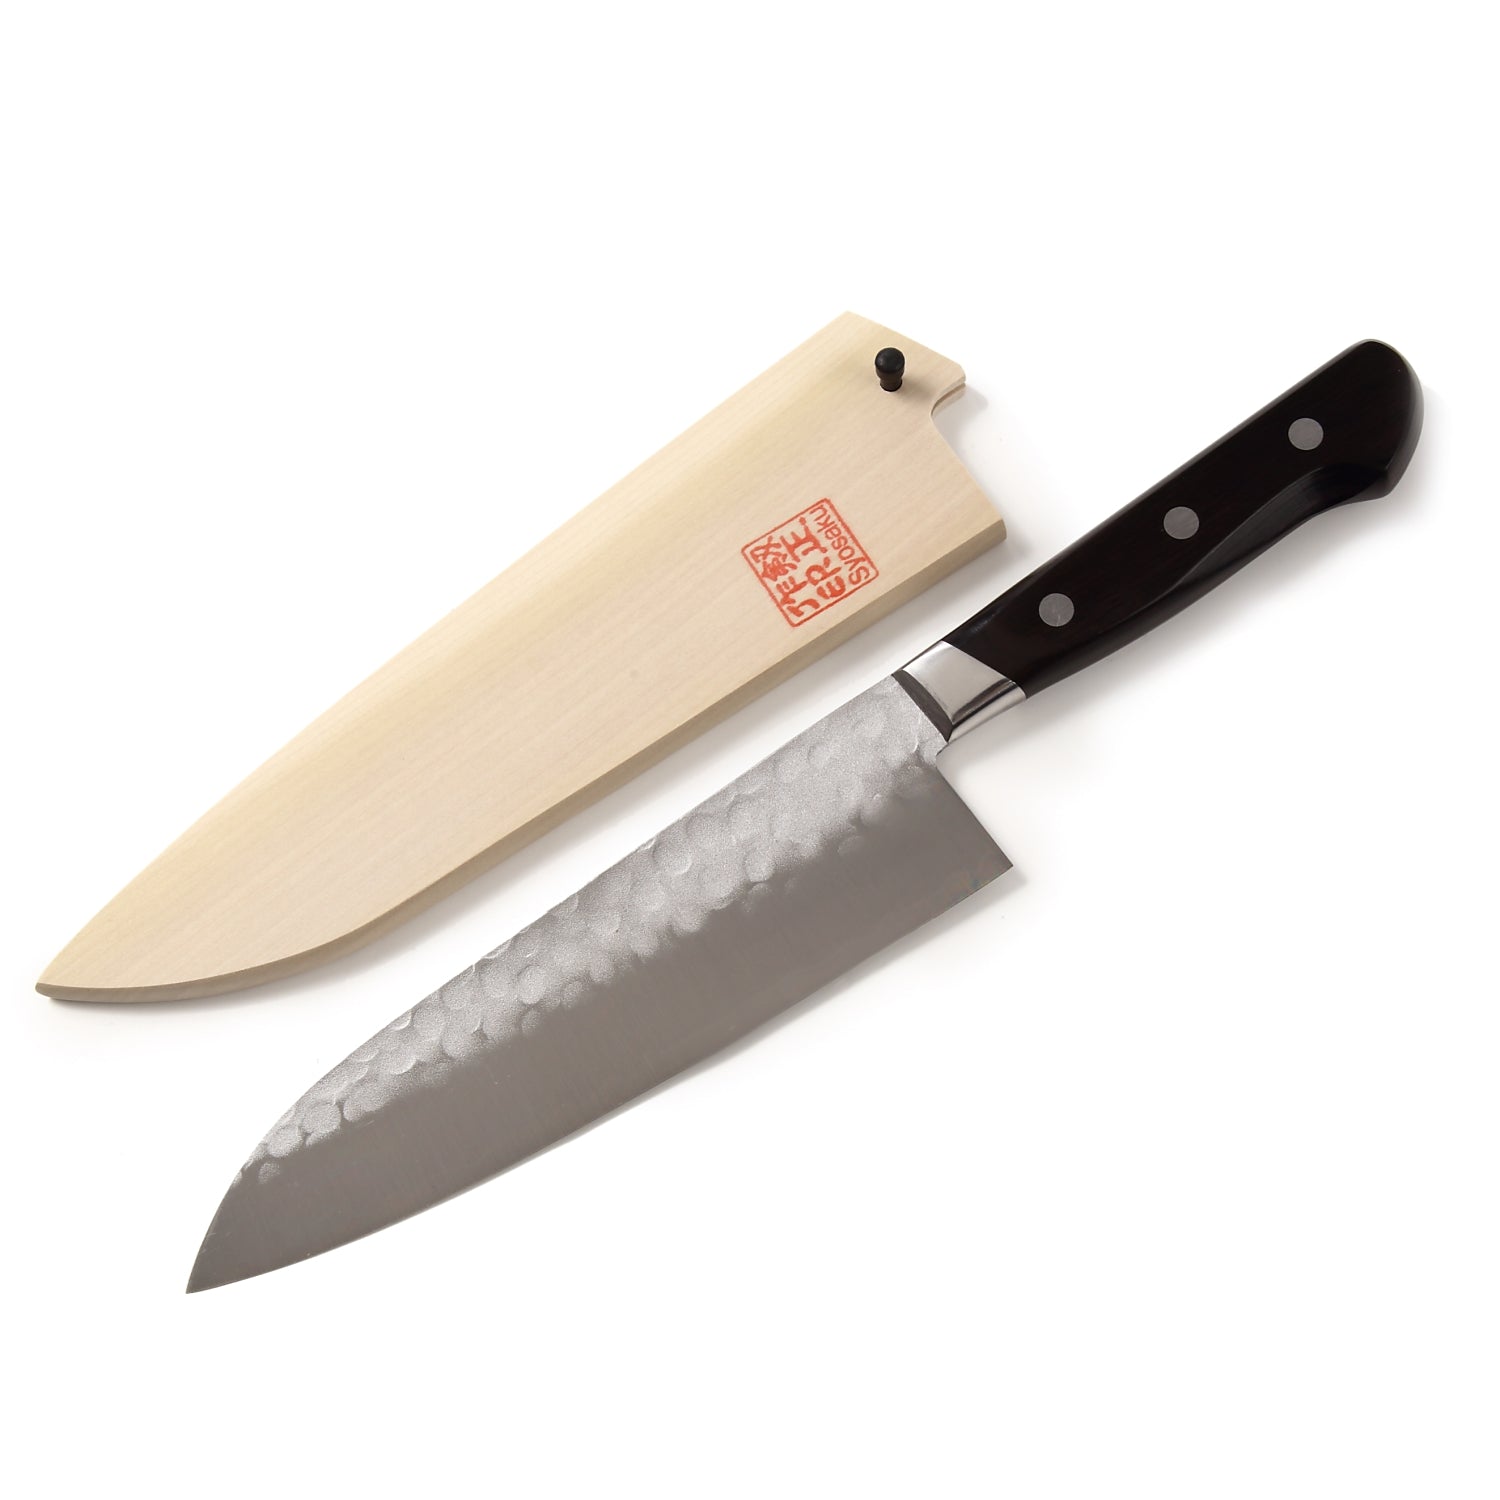 Syosaku Japanese Multi Purpose Best Sharp Kitchen Chef Knife Aoko(Blue Steel)-No.2 Pakkawood Handle, Santoku 7-inch (180mm) with Magnolia Sheath Saya - Syosaku-Japan